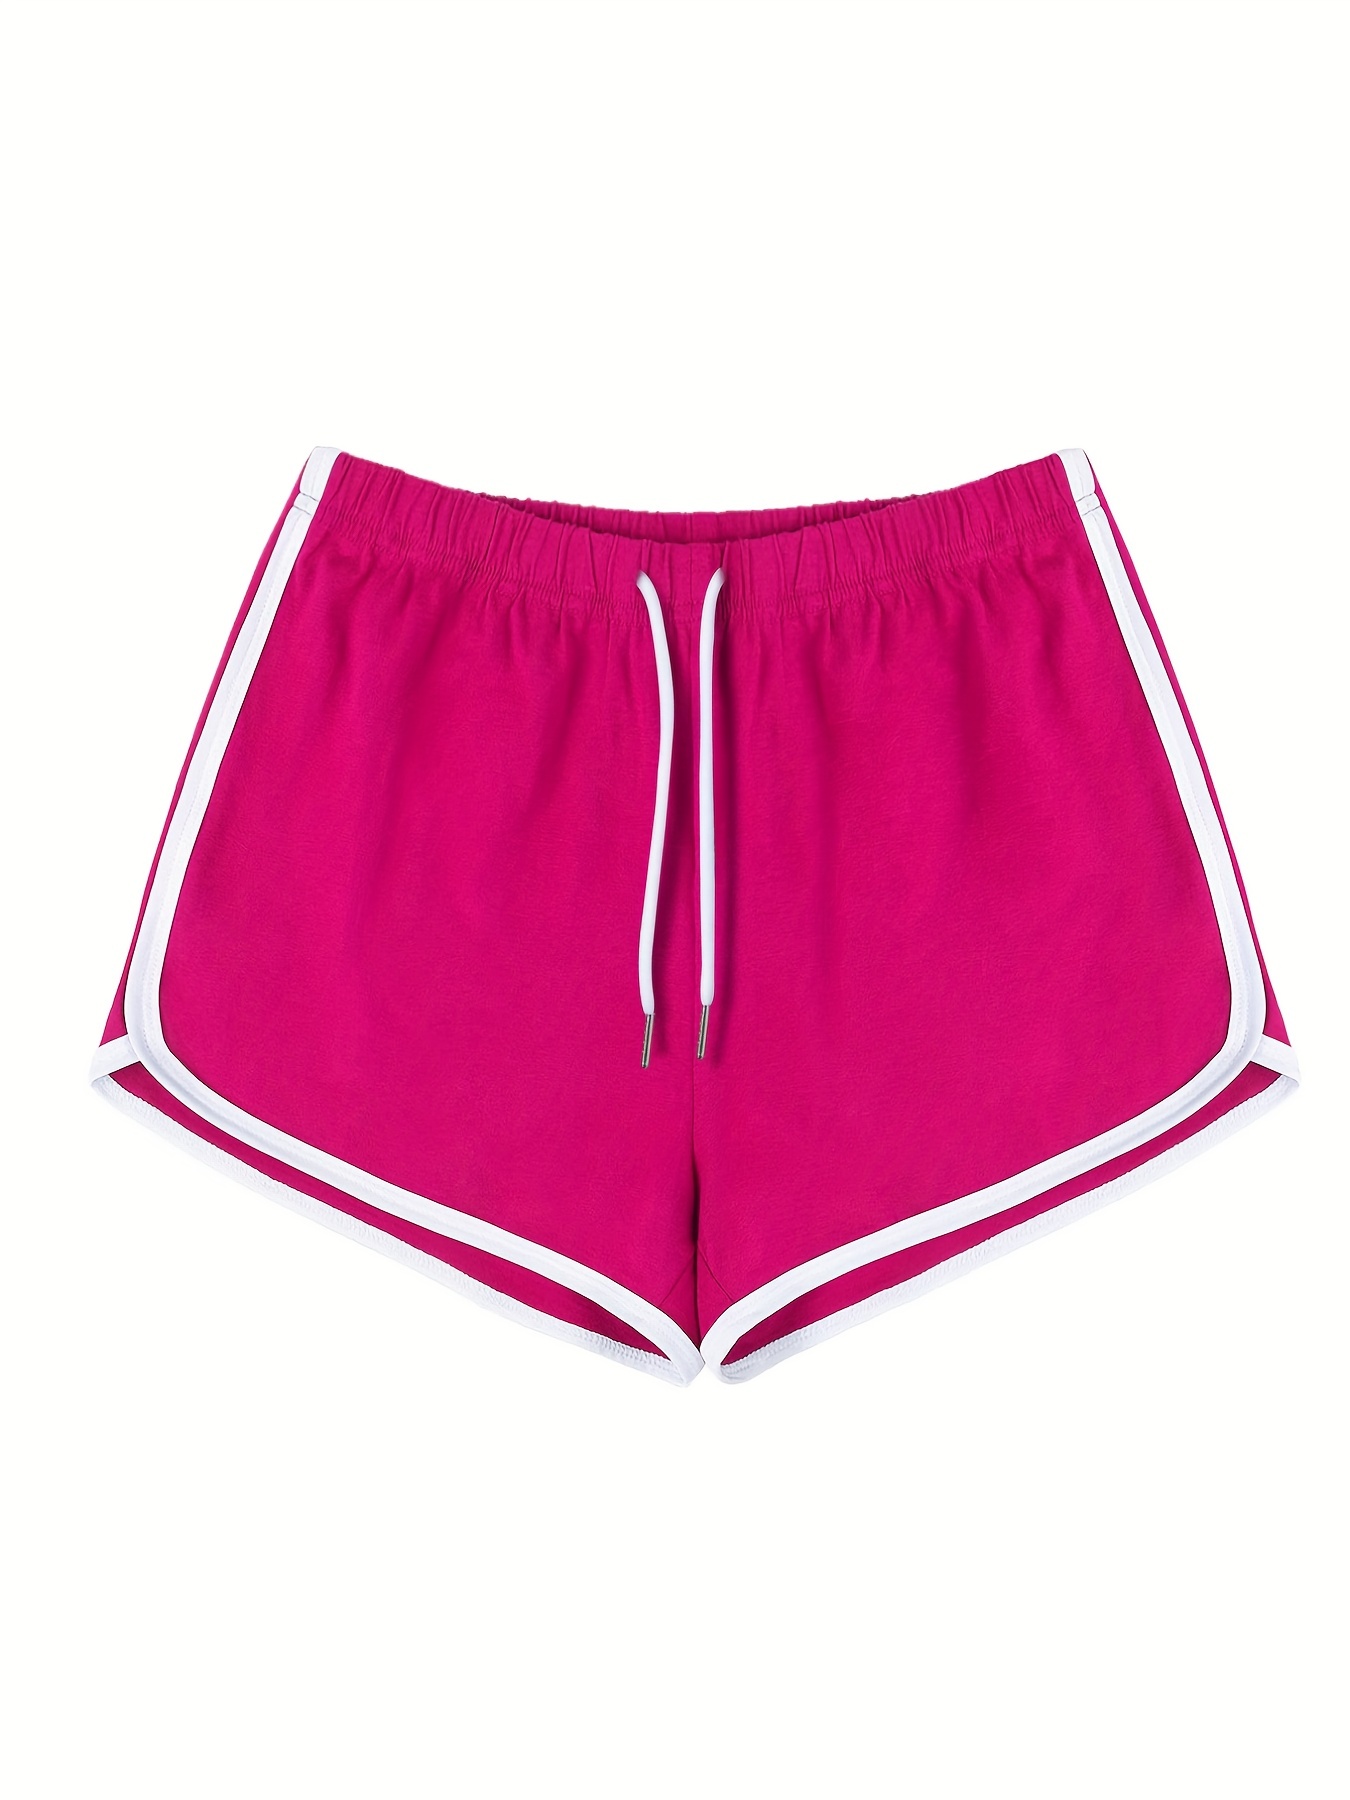 tSe Womens Short, Sleep Wear, Lounger, Drawstring Active Women’s Vibrant  Colors Sport Shorts with Pocket, Walking, Running and Yoga Shorts, Pink,  L/XL